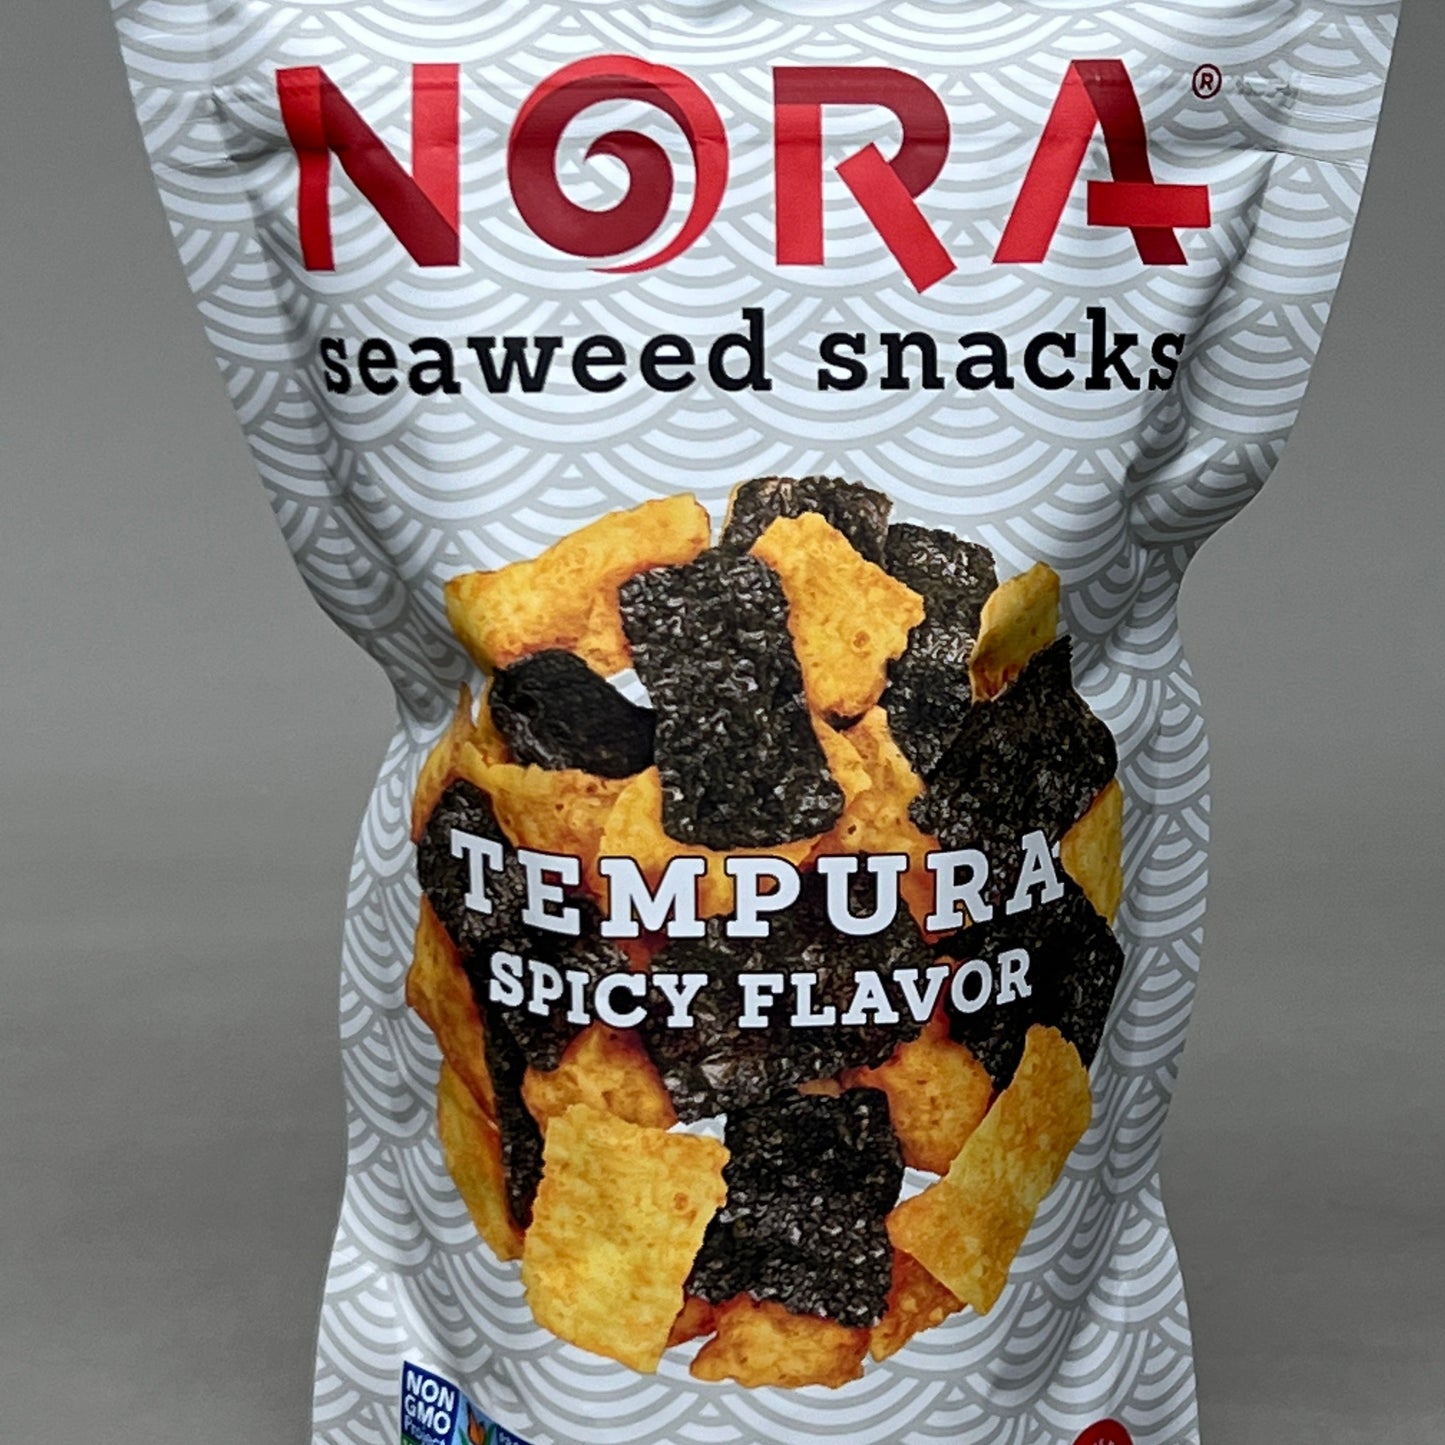 z@ NORA Seaweed Snacks Tempura Spicy Flavor GF Non GMO 1.13 oz 07/23 855258006249 (New)